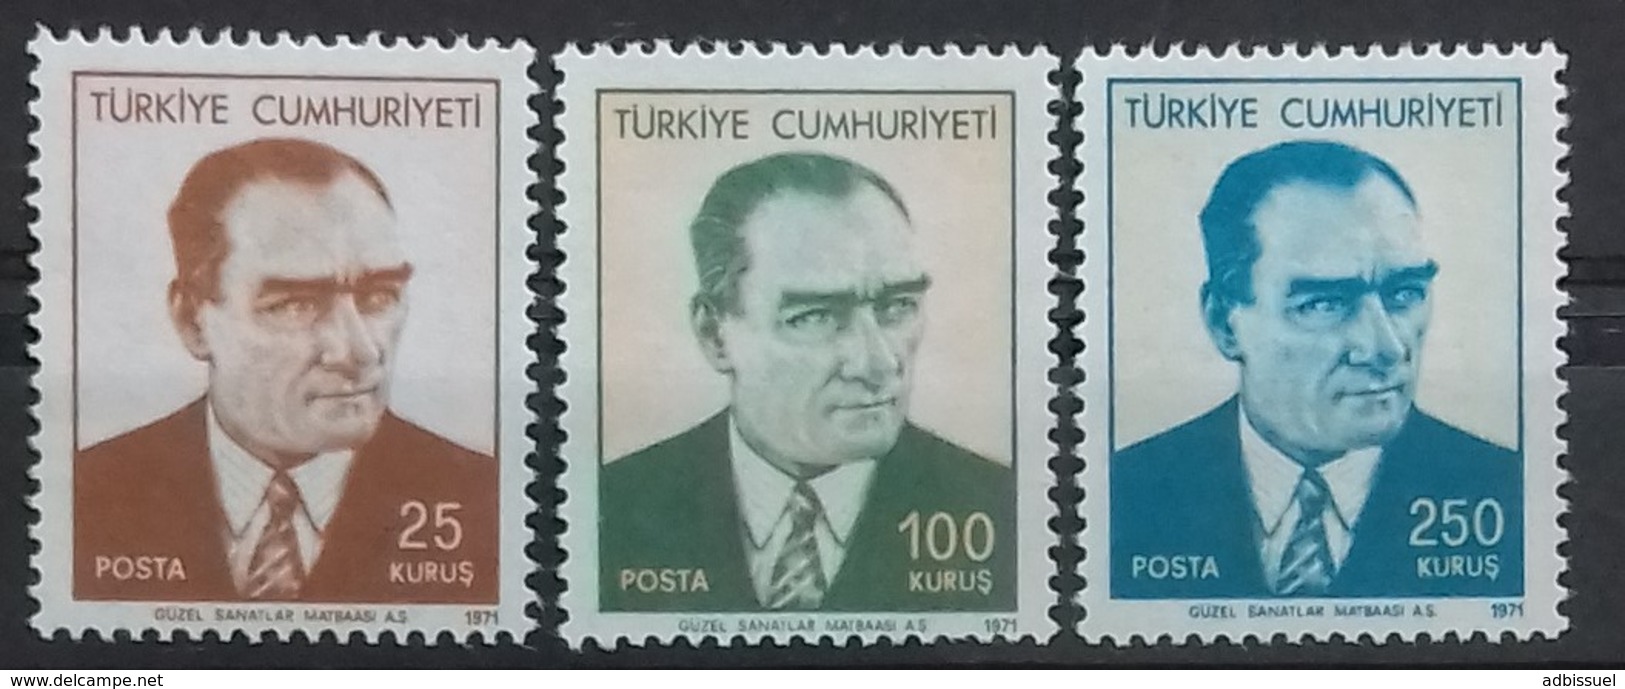 TURQUIE TURKEY N° 1983 à 1985 COTE 6 €  NEUFS ** MNH 1971 ATATURK - Nuovi